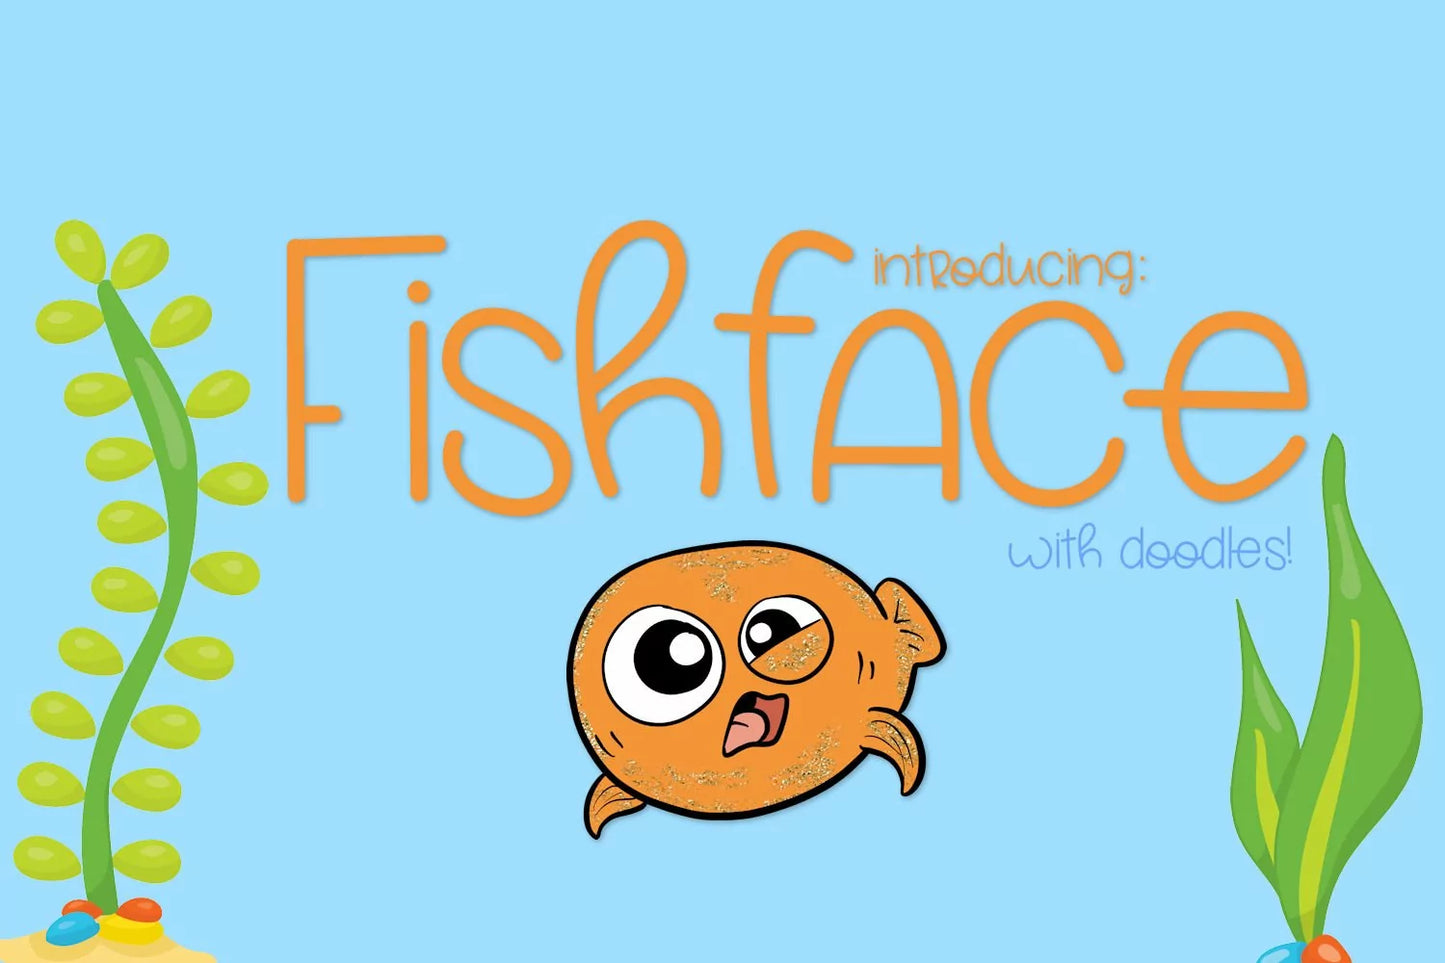 Fish Face - A Fun Handwritten Font With Doodles!